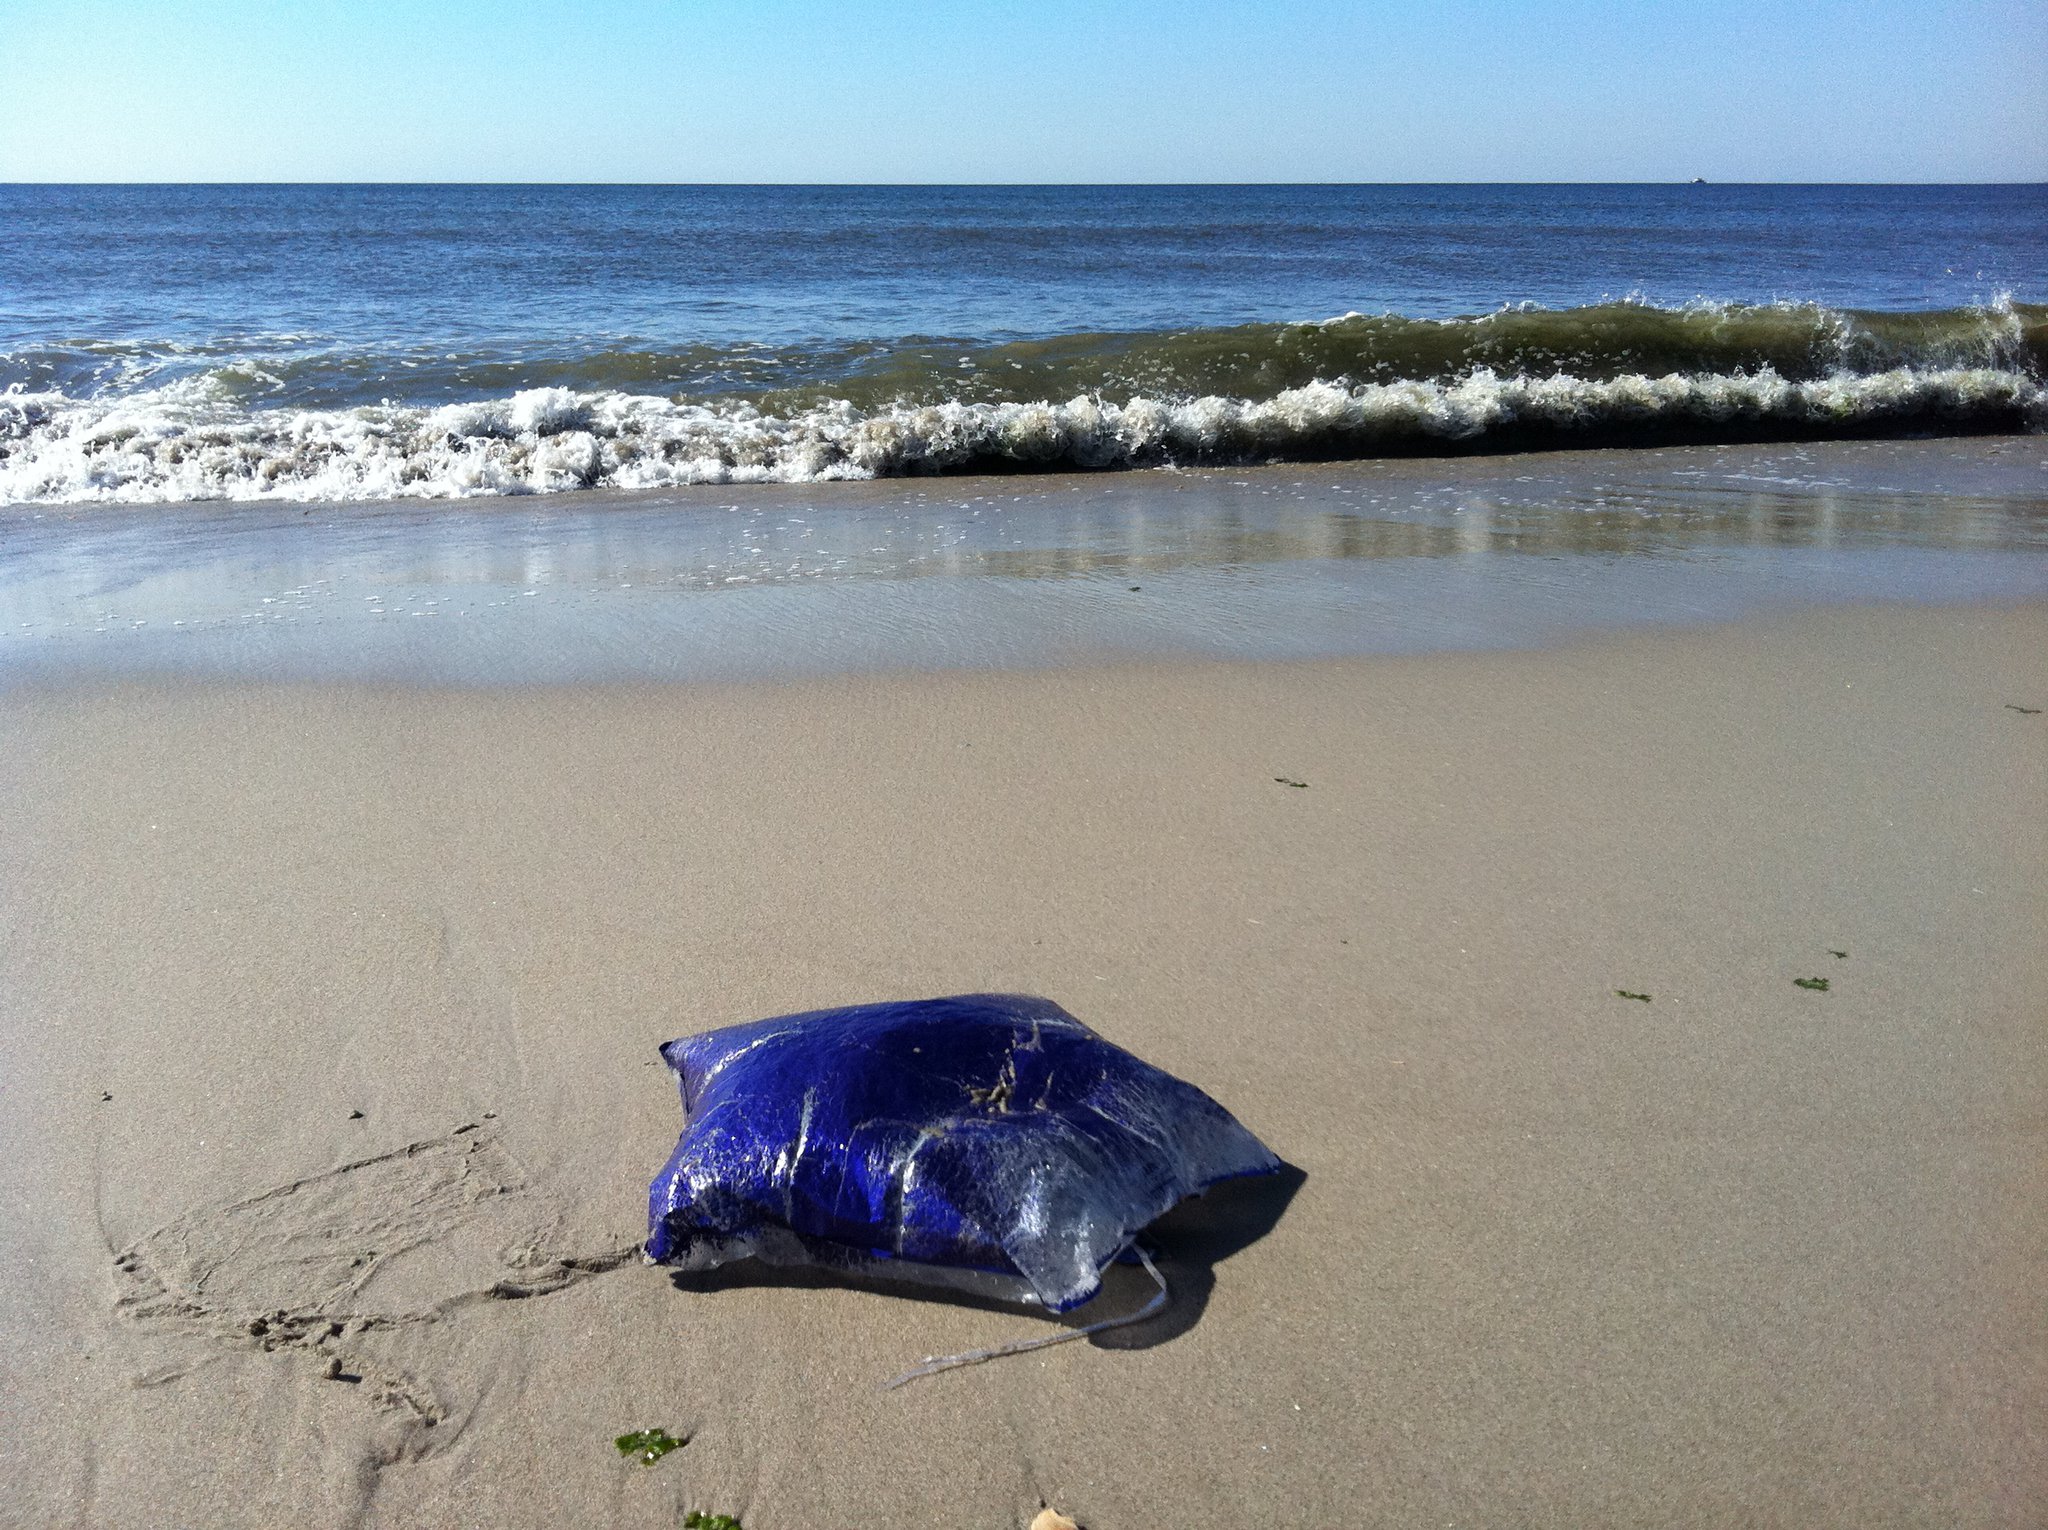 deadly jellyfish on rockaway beach (actually deflated mylar balloon)